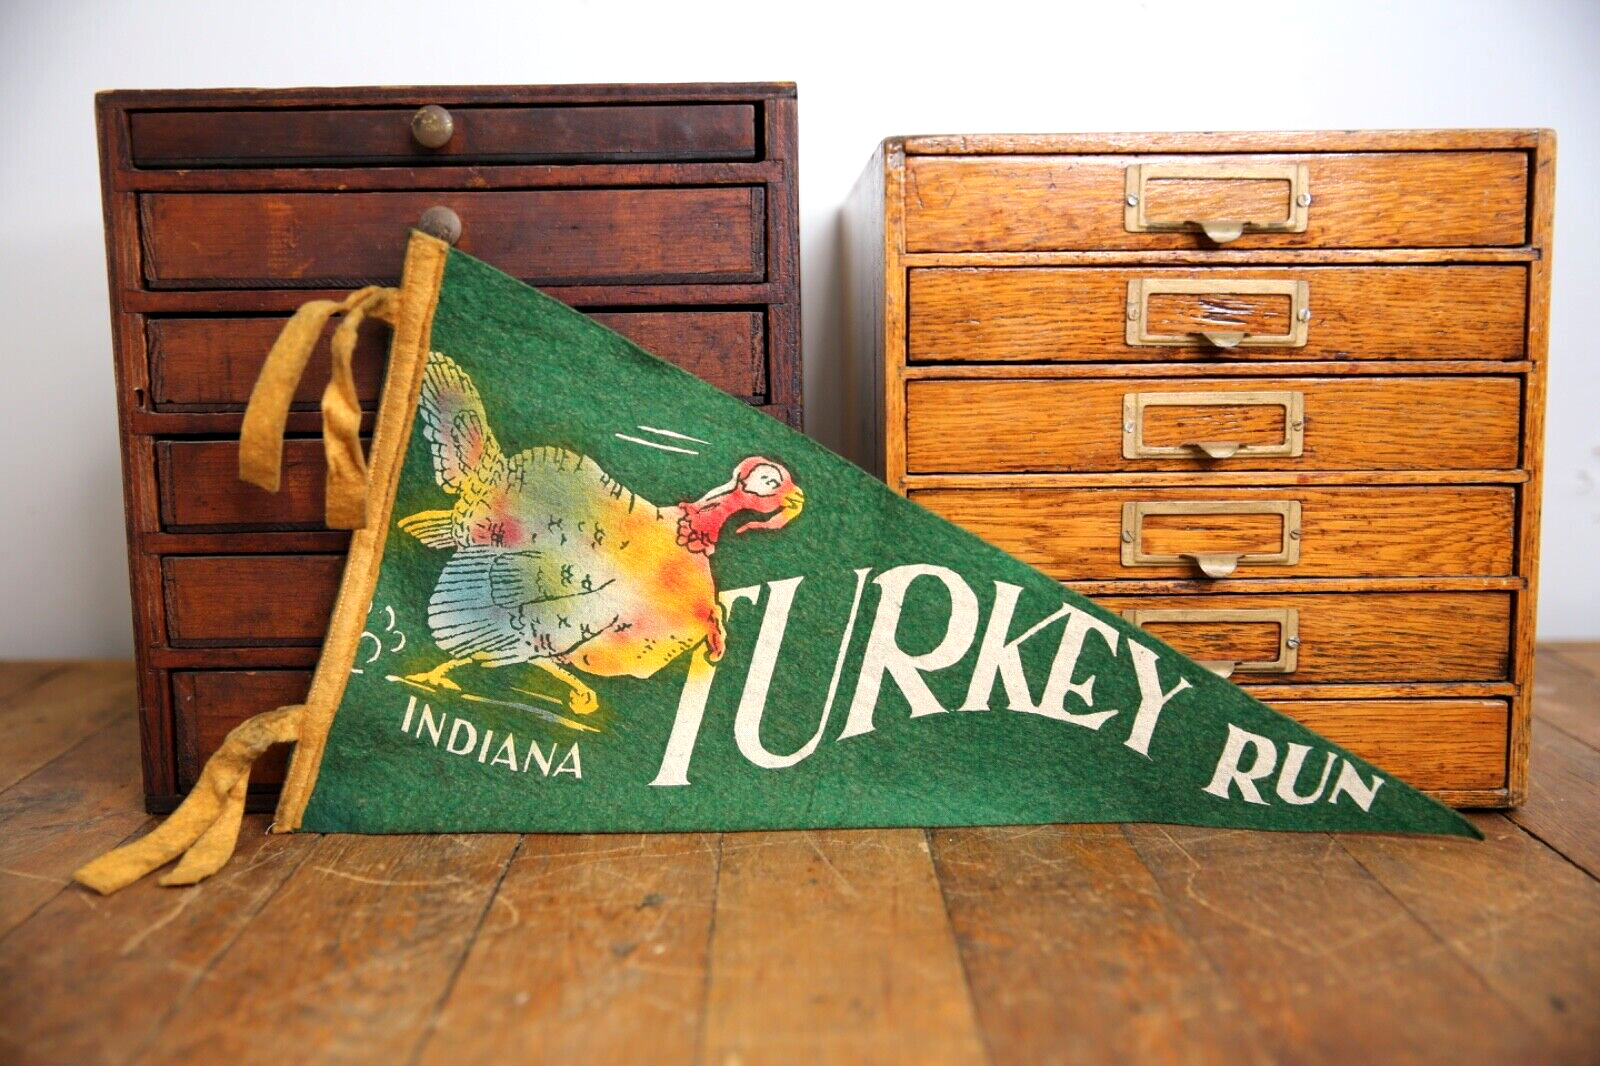 Vintage Indiana Turkey Run felt pennant State Park banner sign flag Green old